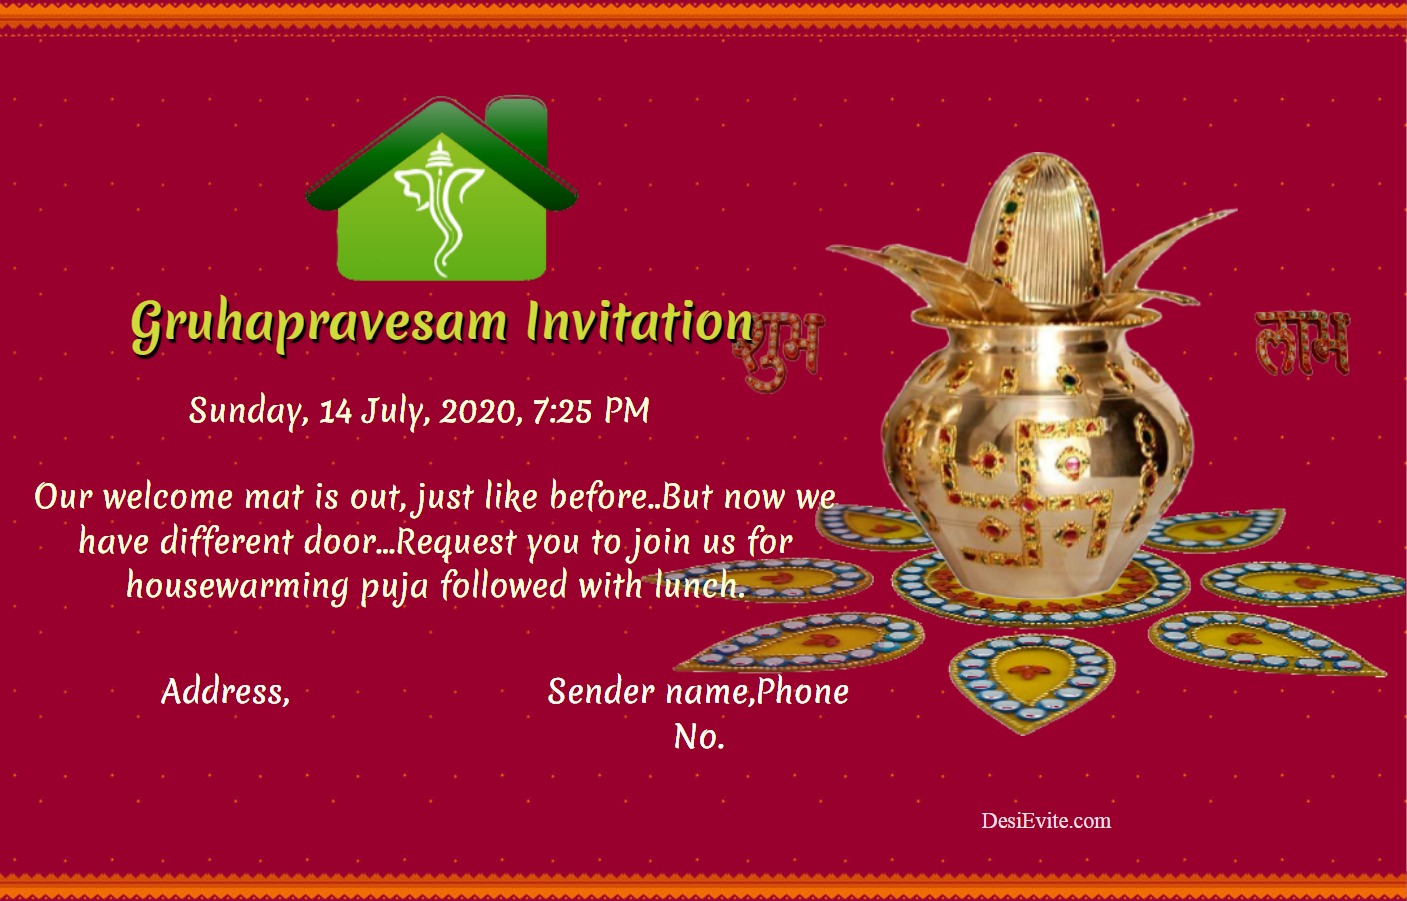 Gruhapravesam Invitation 166 